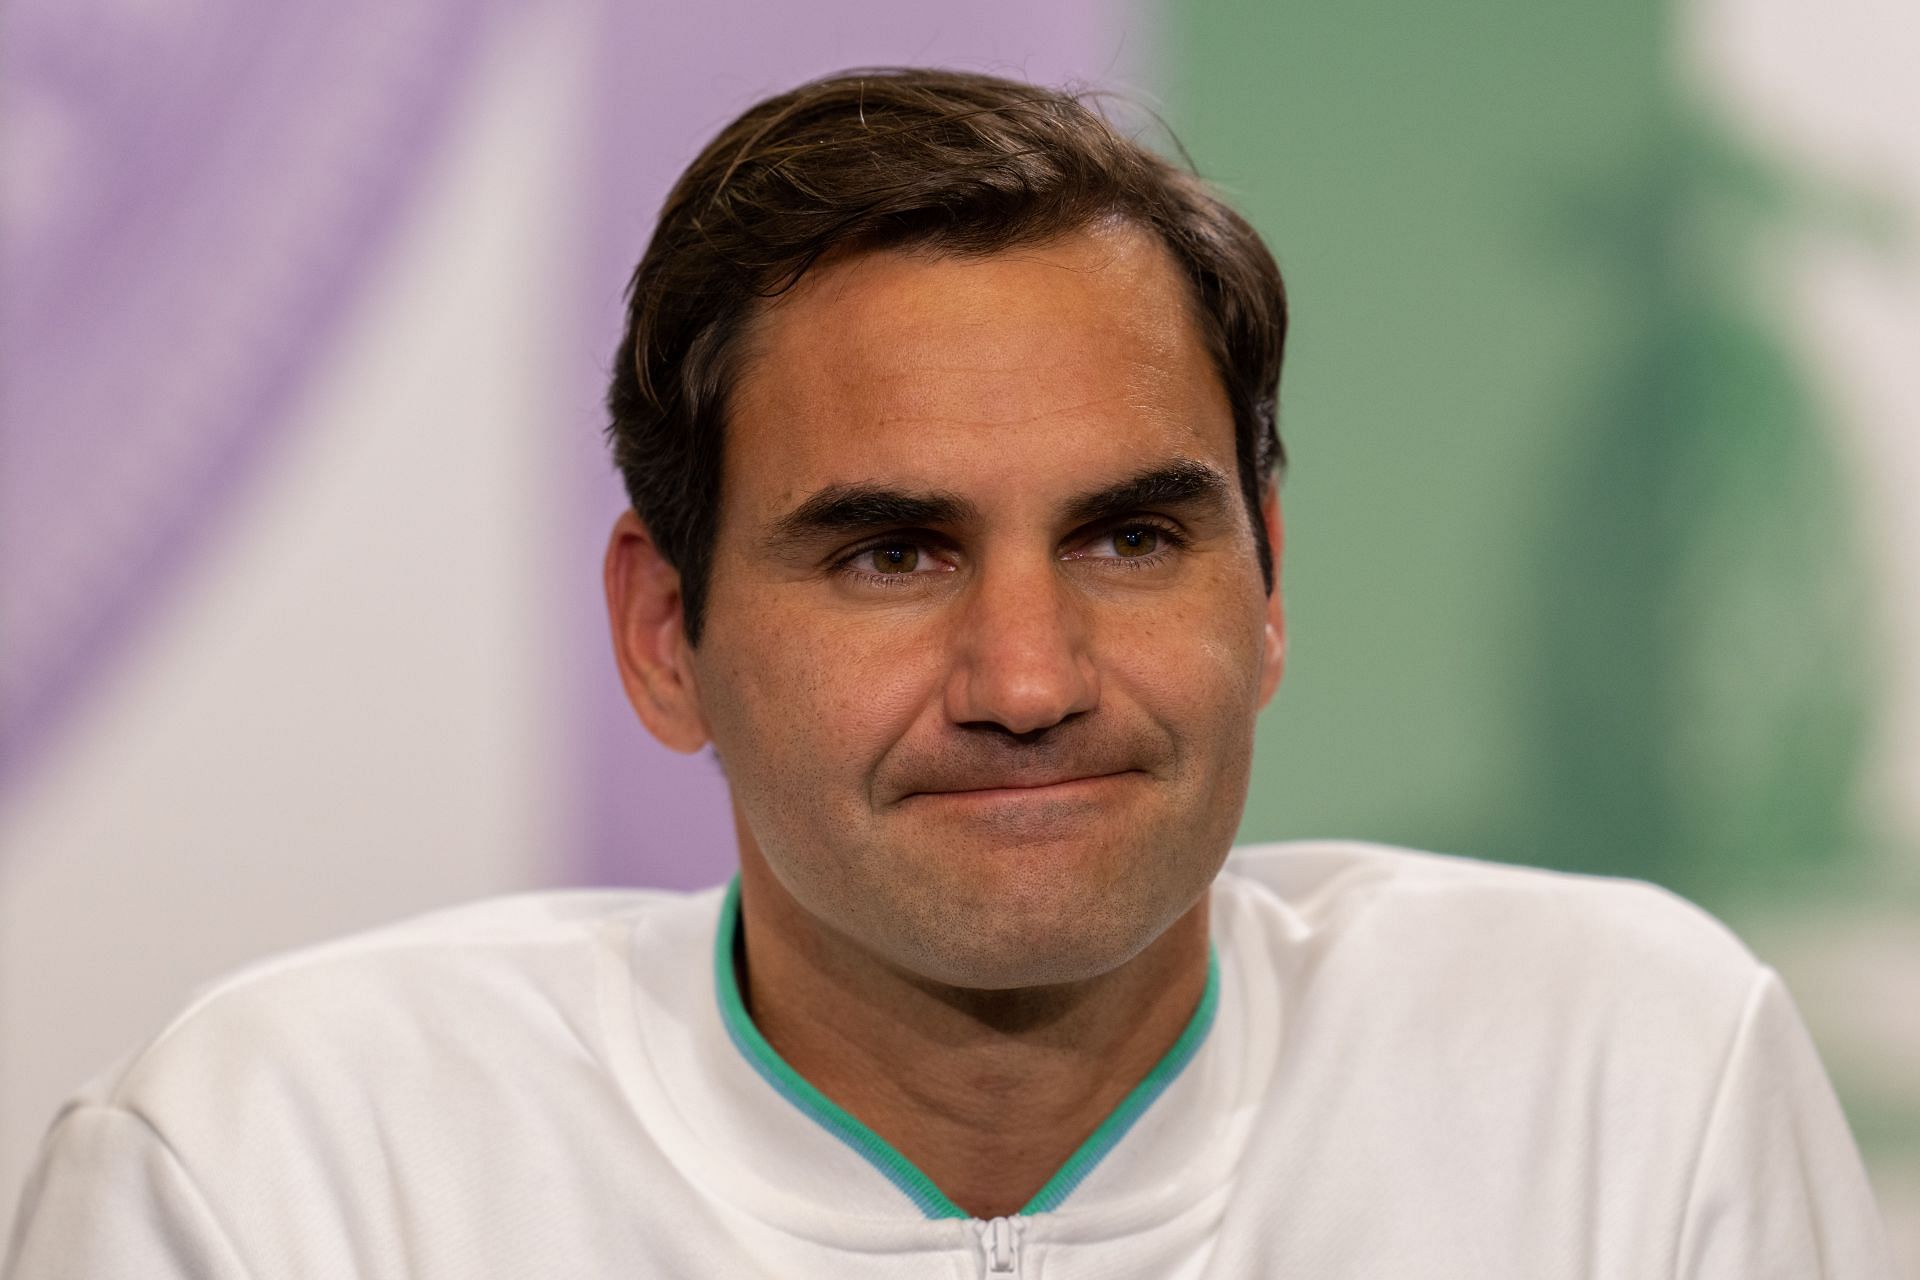 Roger Federer attends a press conference at Wimbledon 2021